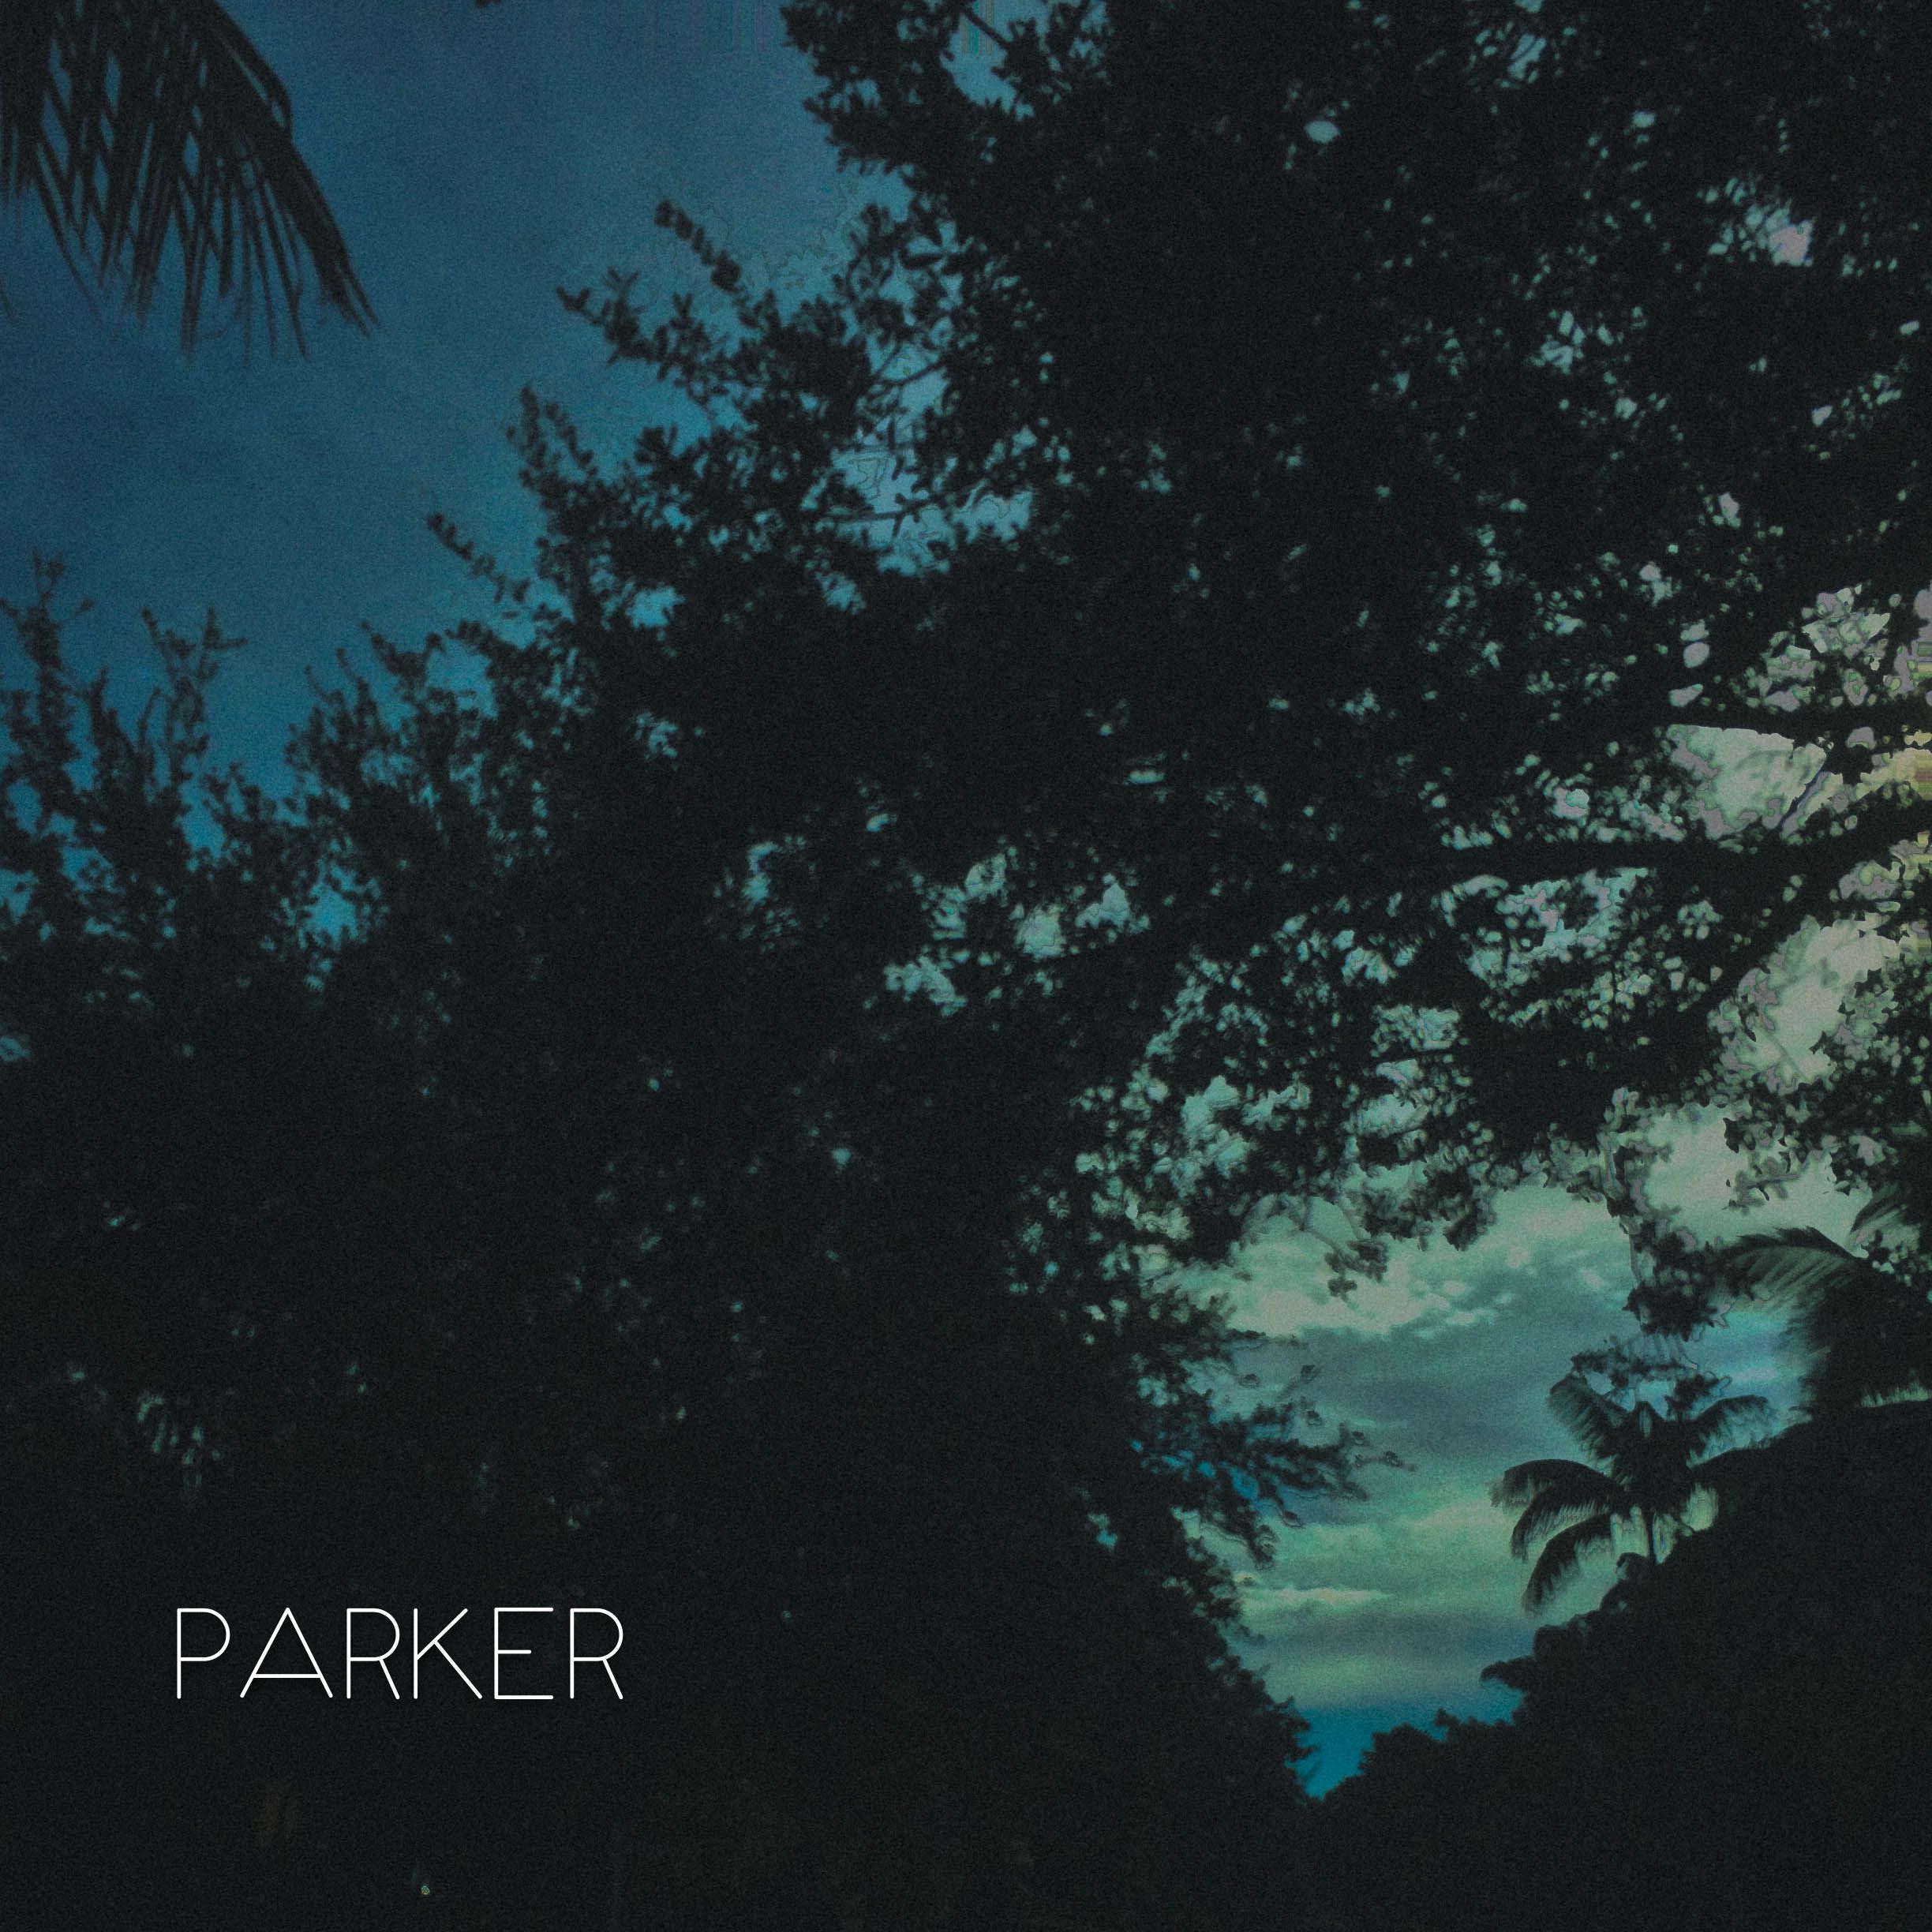 Parker – “Windmaker”